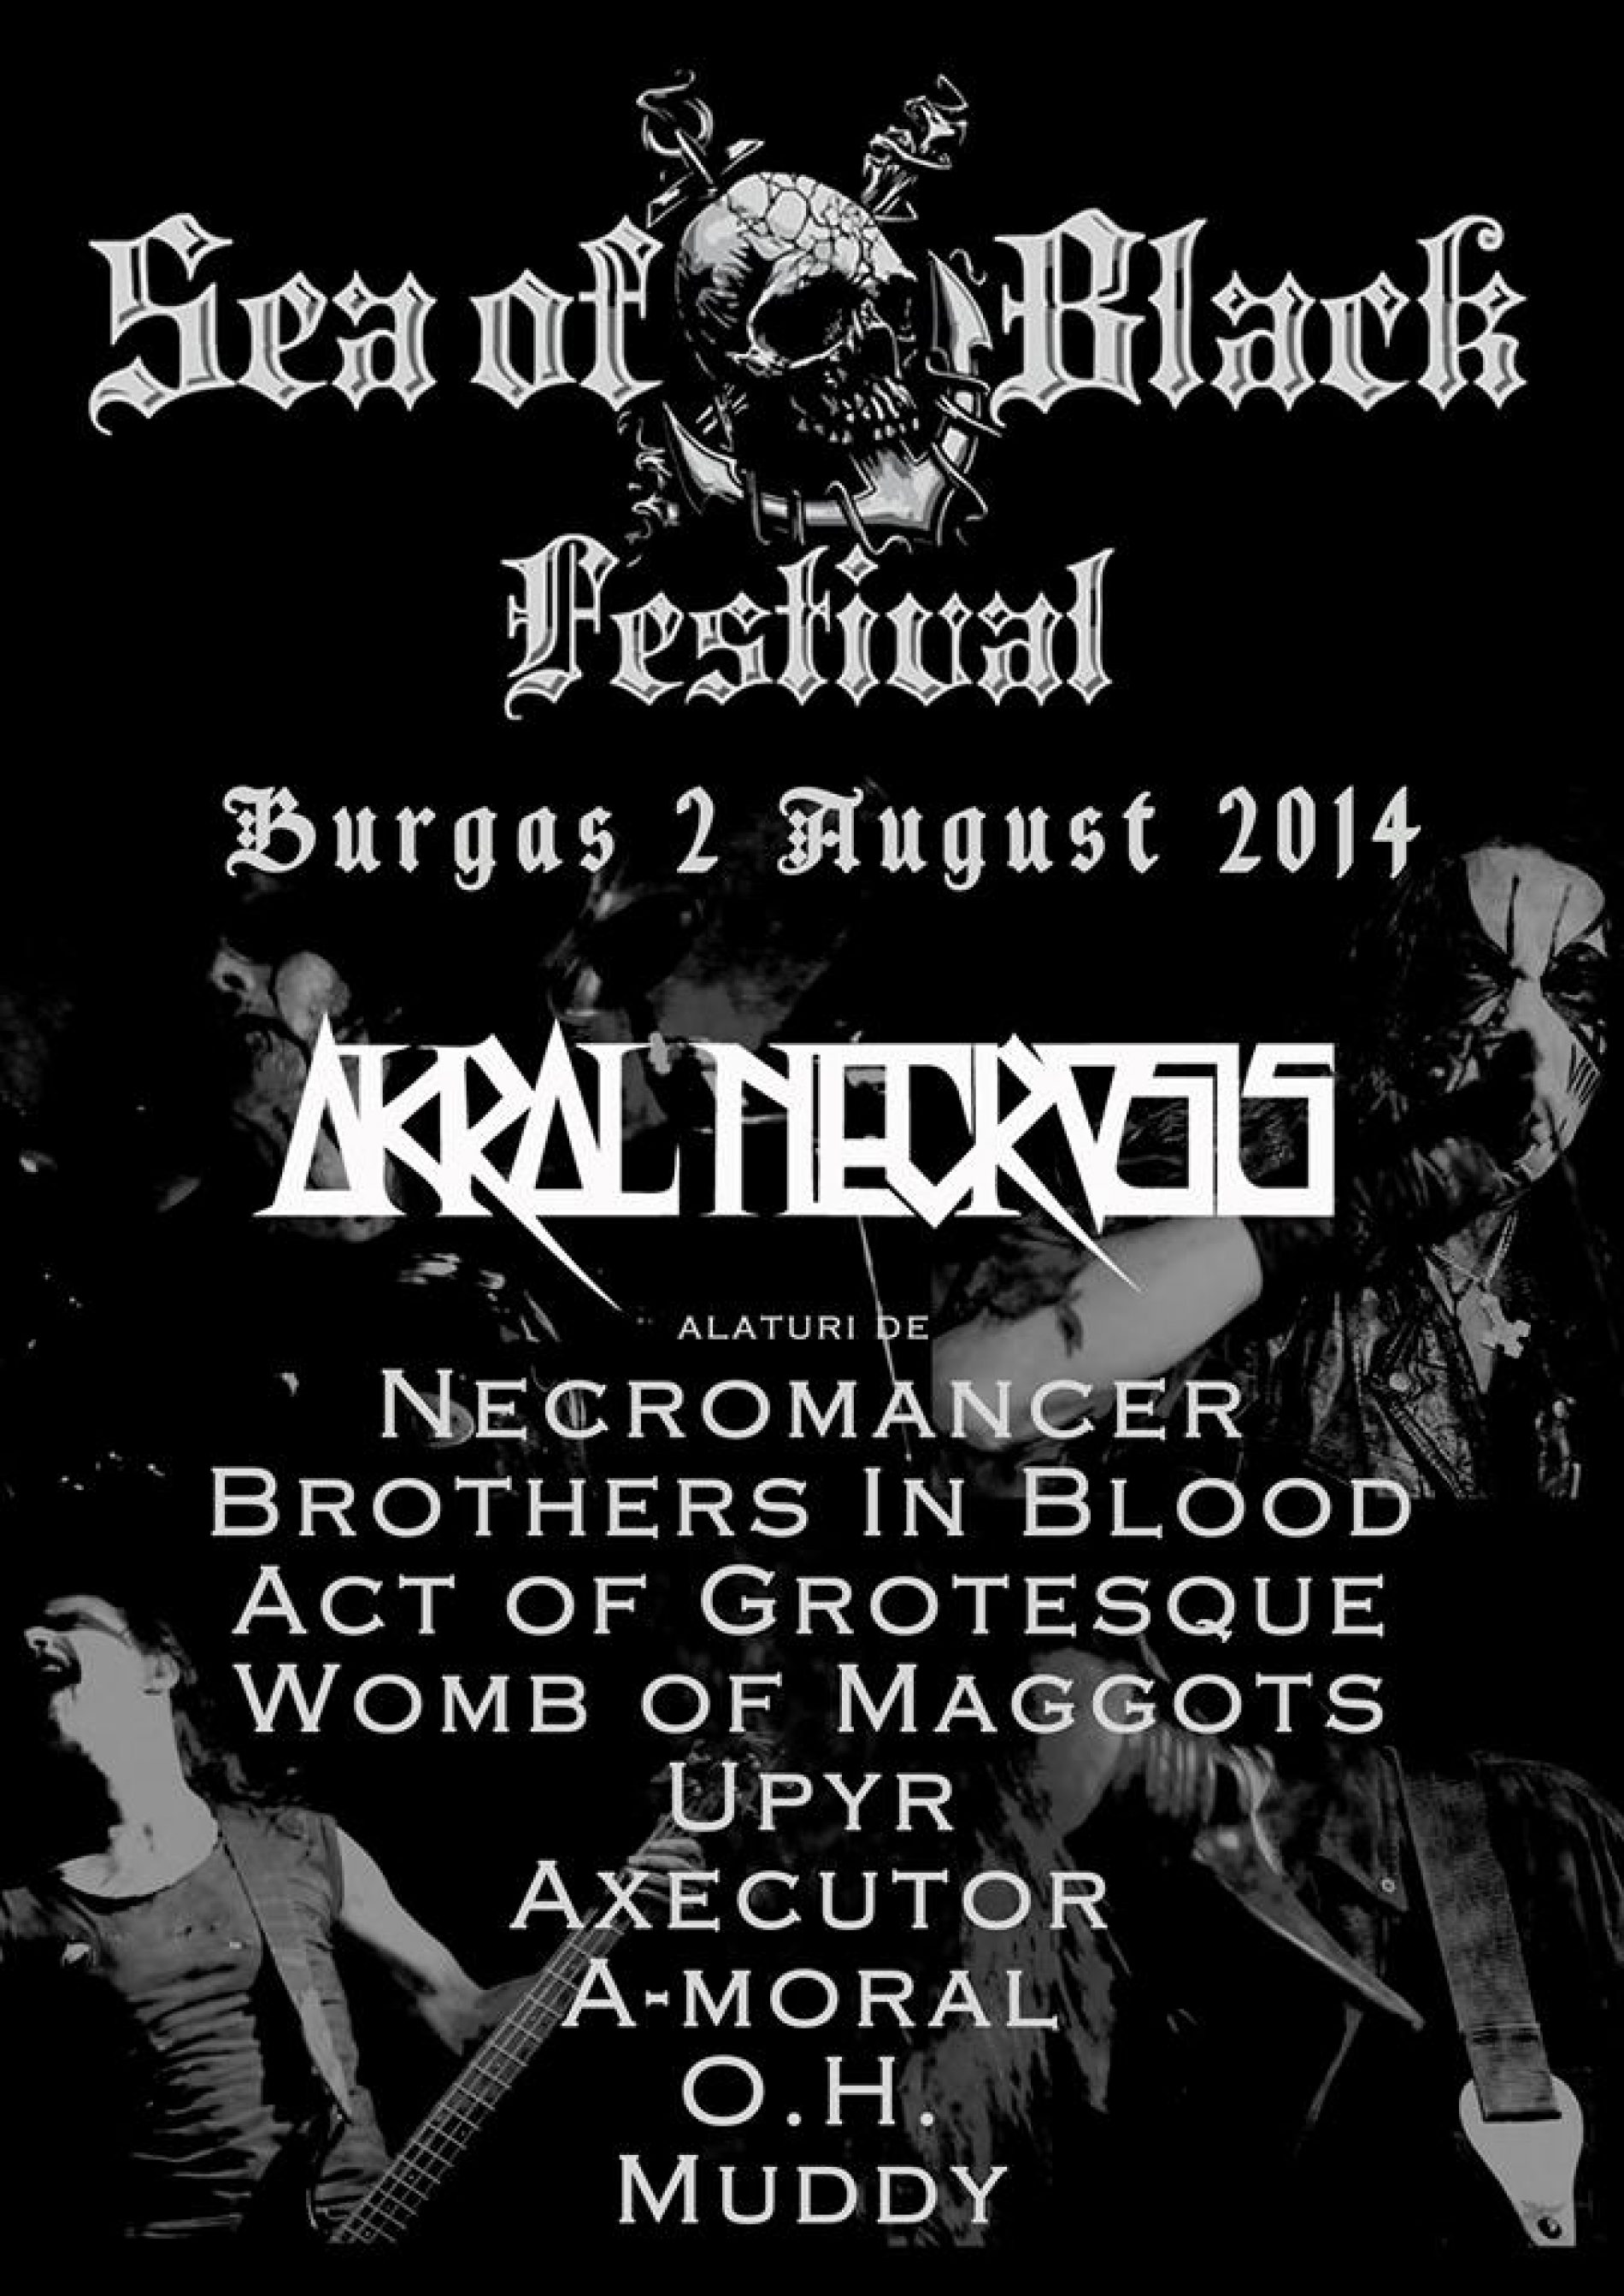 Akral Necrosis: Sea of Black Festival 2014, Burgas